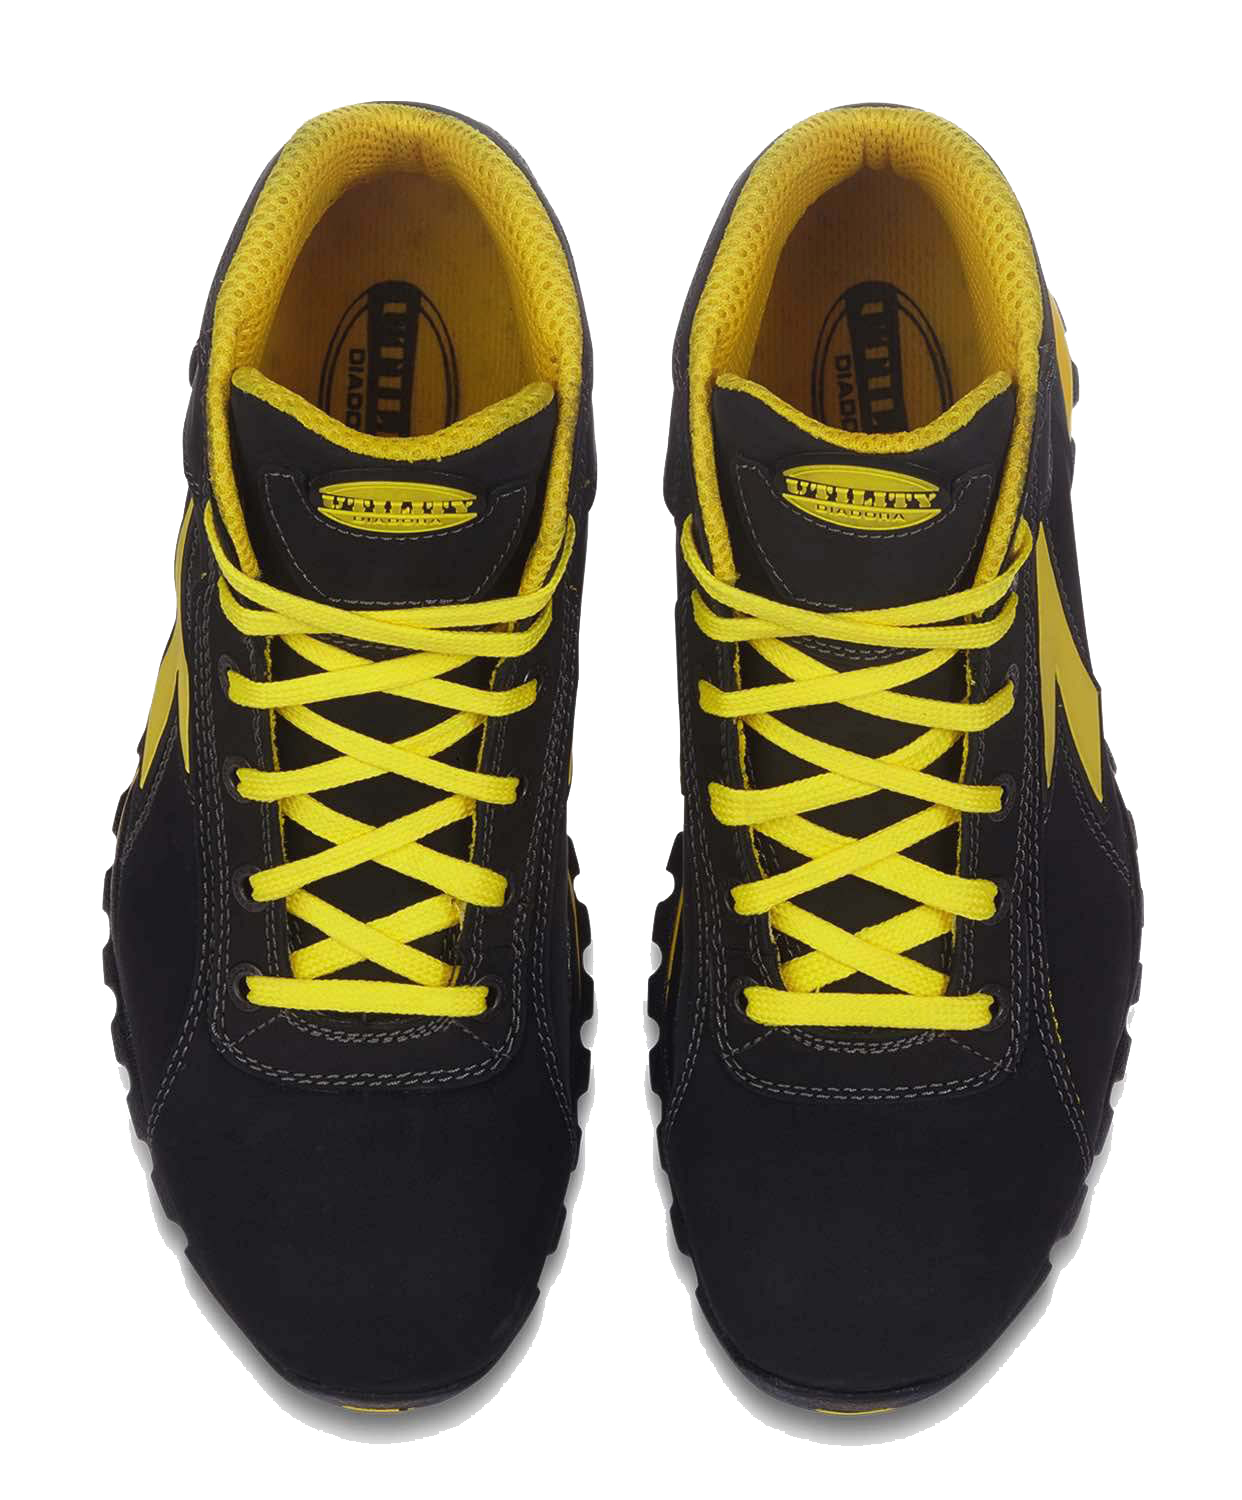 Chaussures de sécurité hautes GLOVE II HIGH S3 SRA HRO noir/jaune P48 - DIADORA SPA - 701.170234